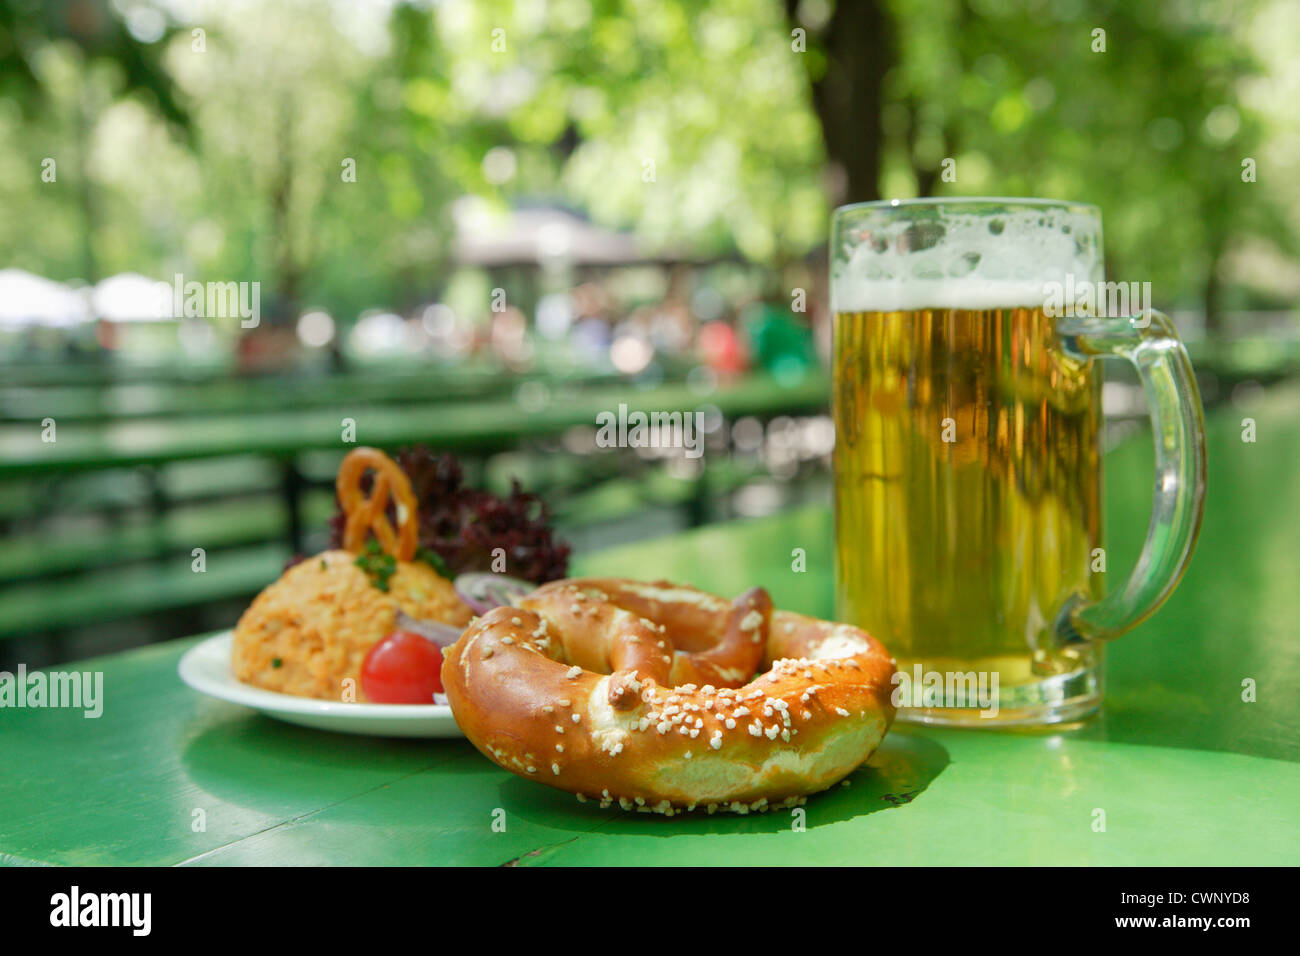 Germany, Bavaria, Munich, Vegetarian dish with mug of beer, close up Stock Photo